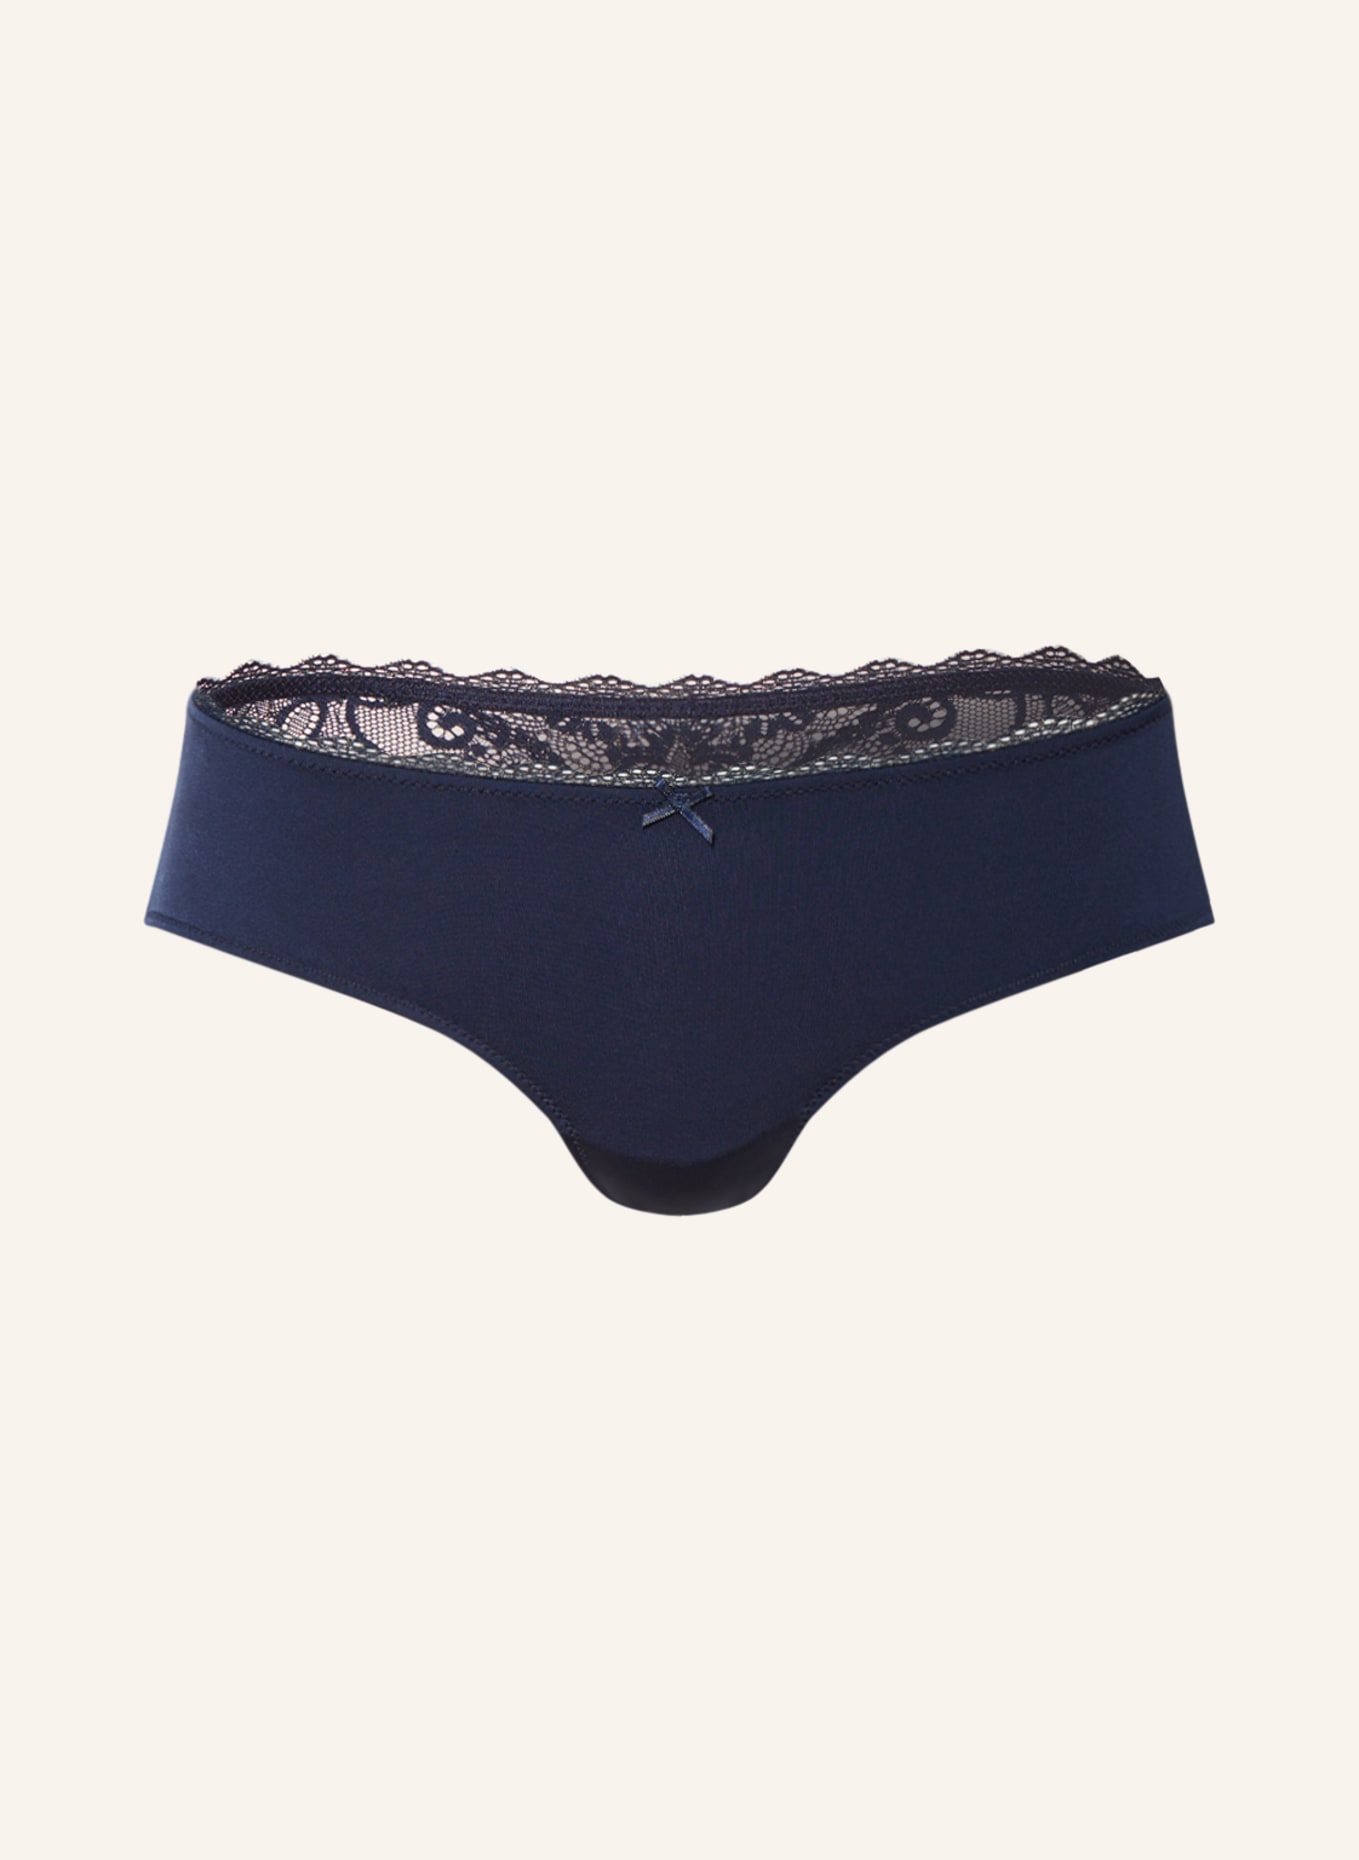 mey Panty series AMOROUS DELUXE in dark blue